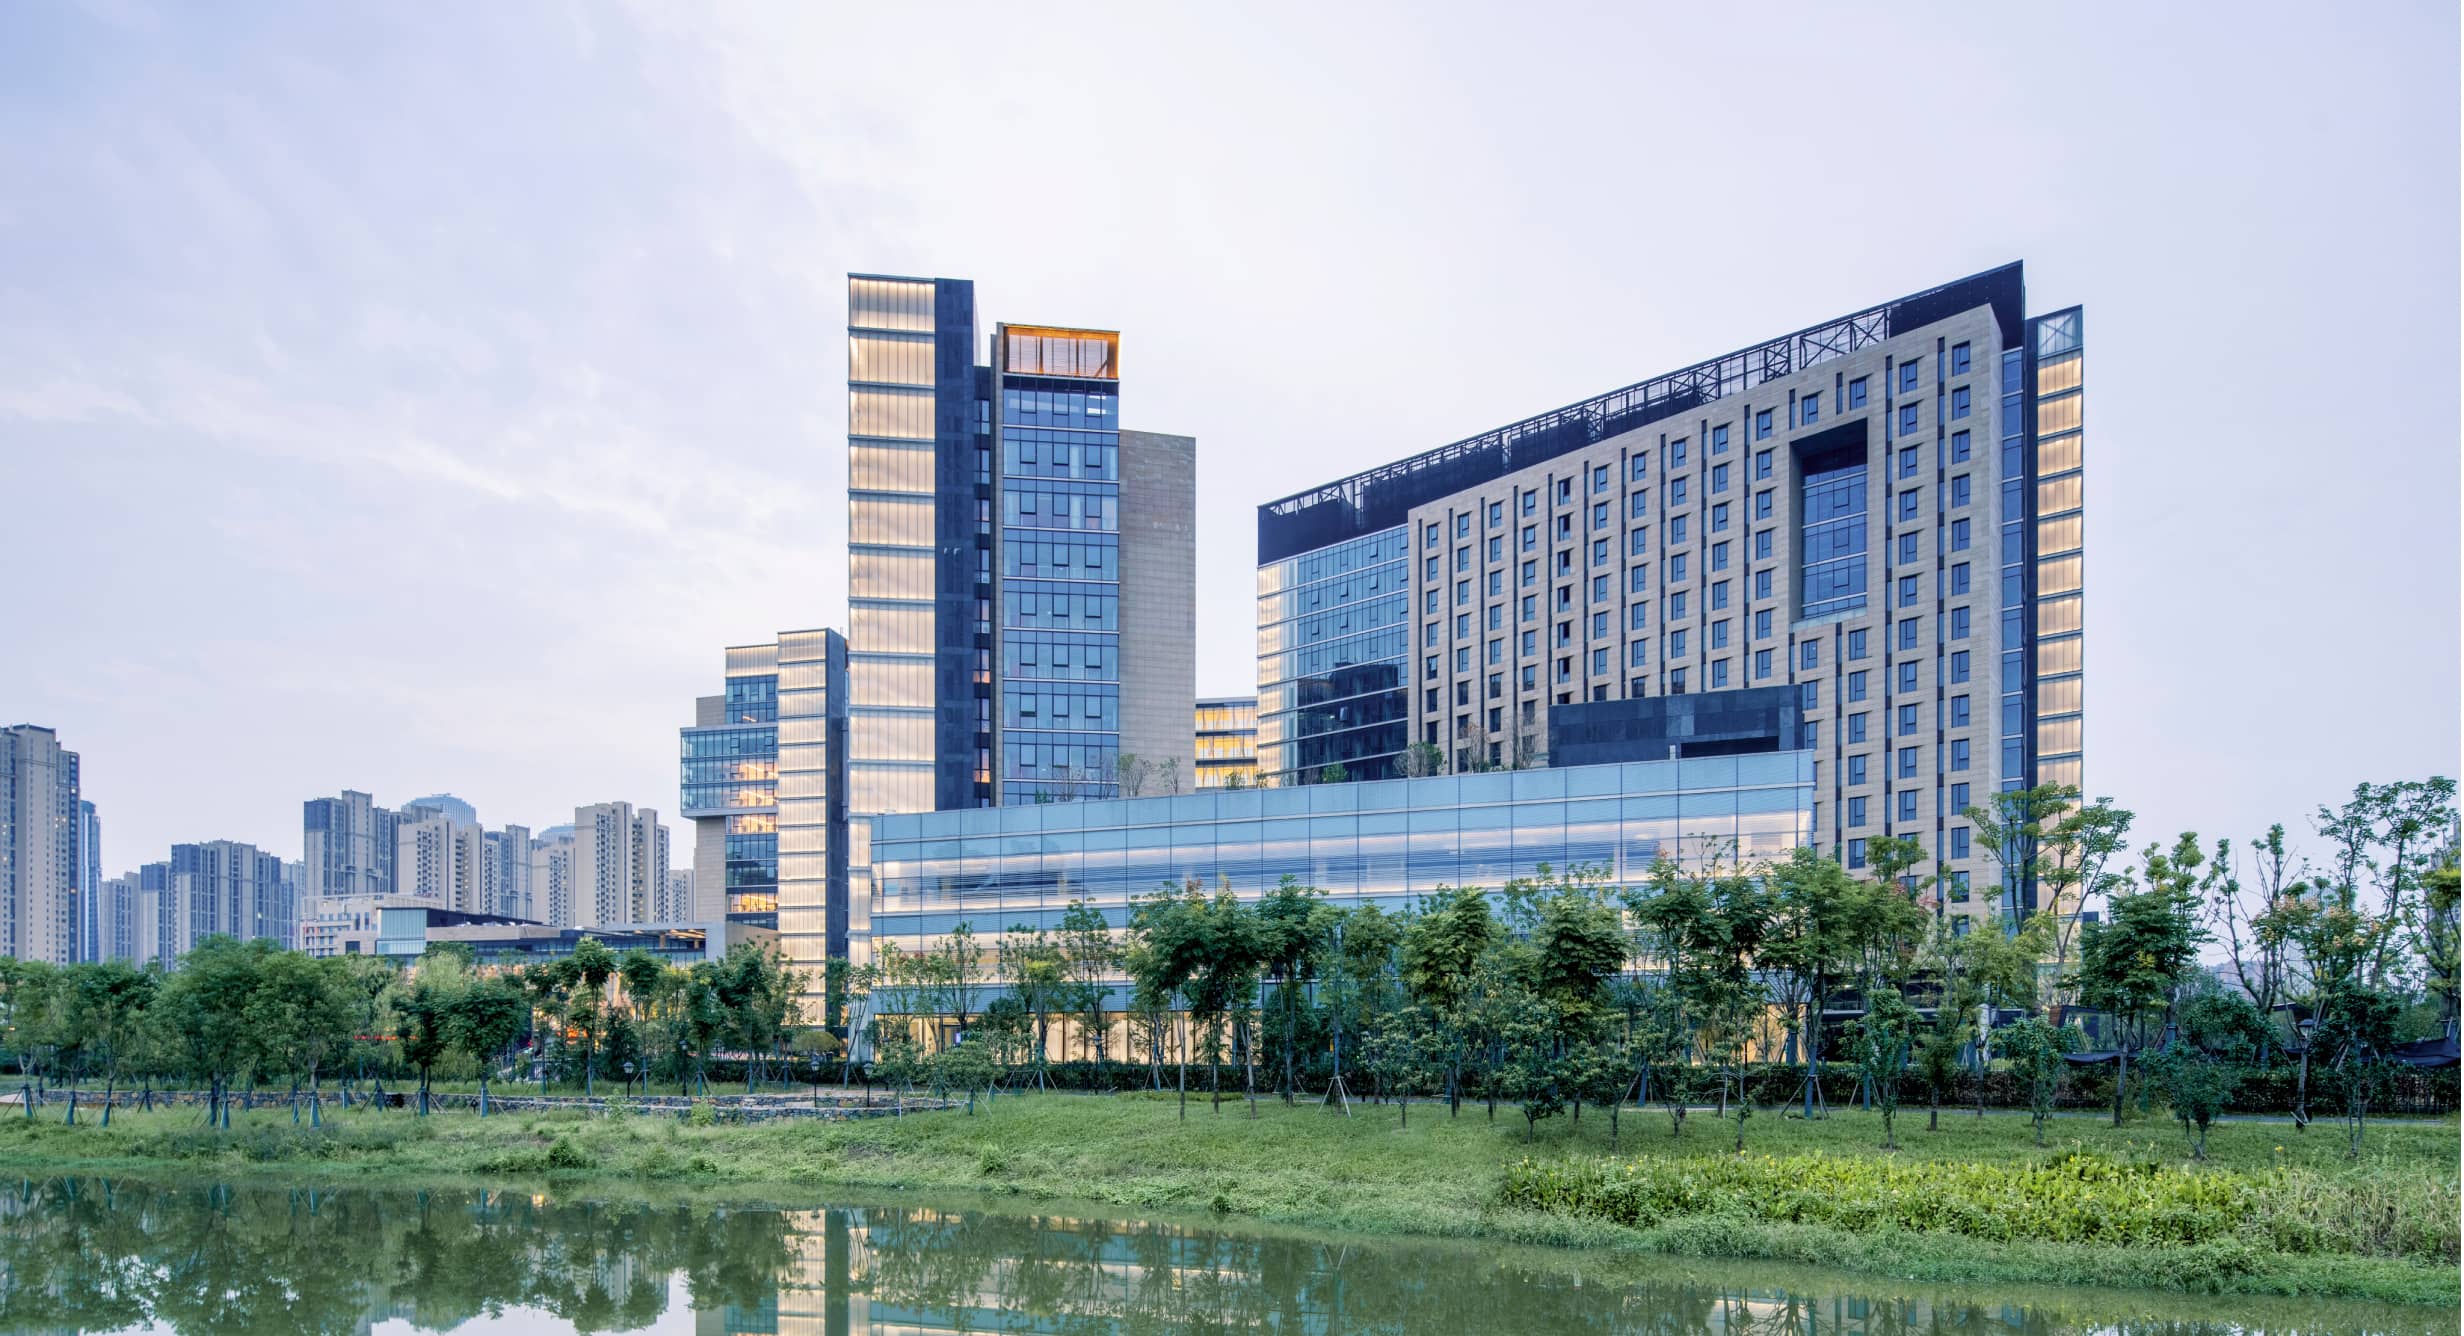 Taikang Tongji International Hospital